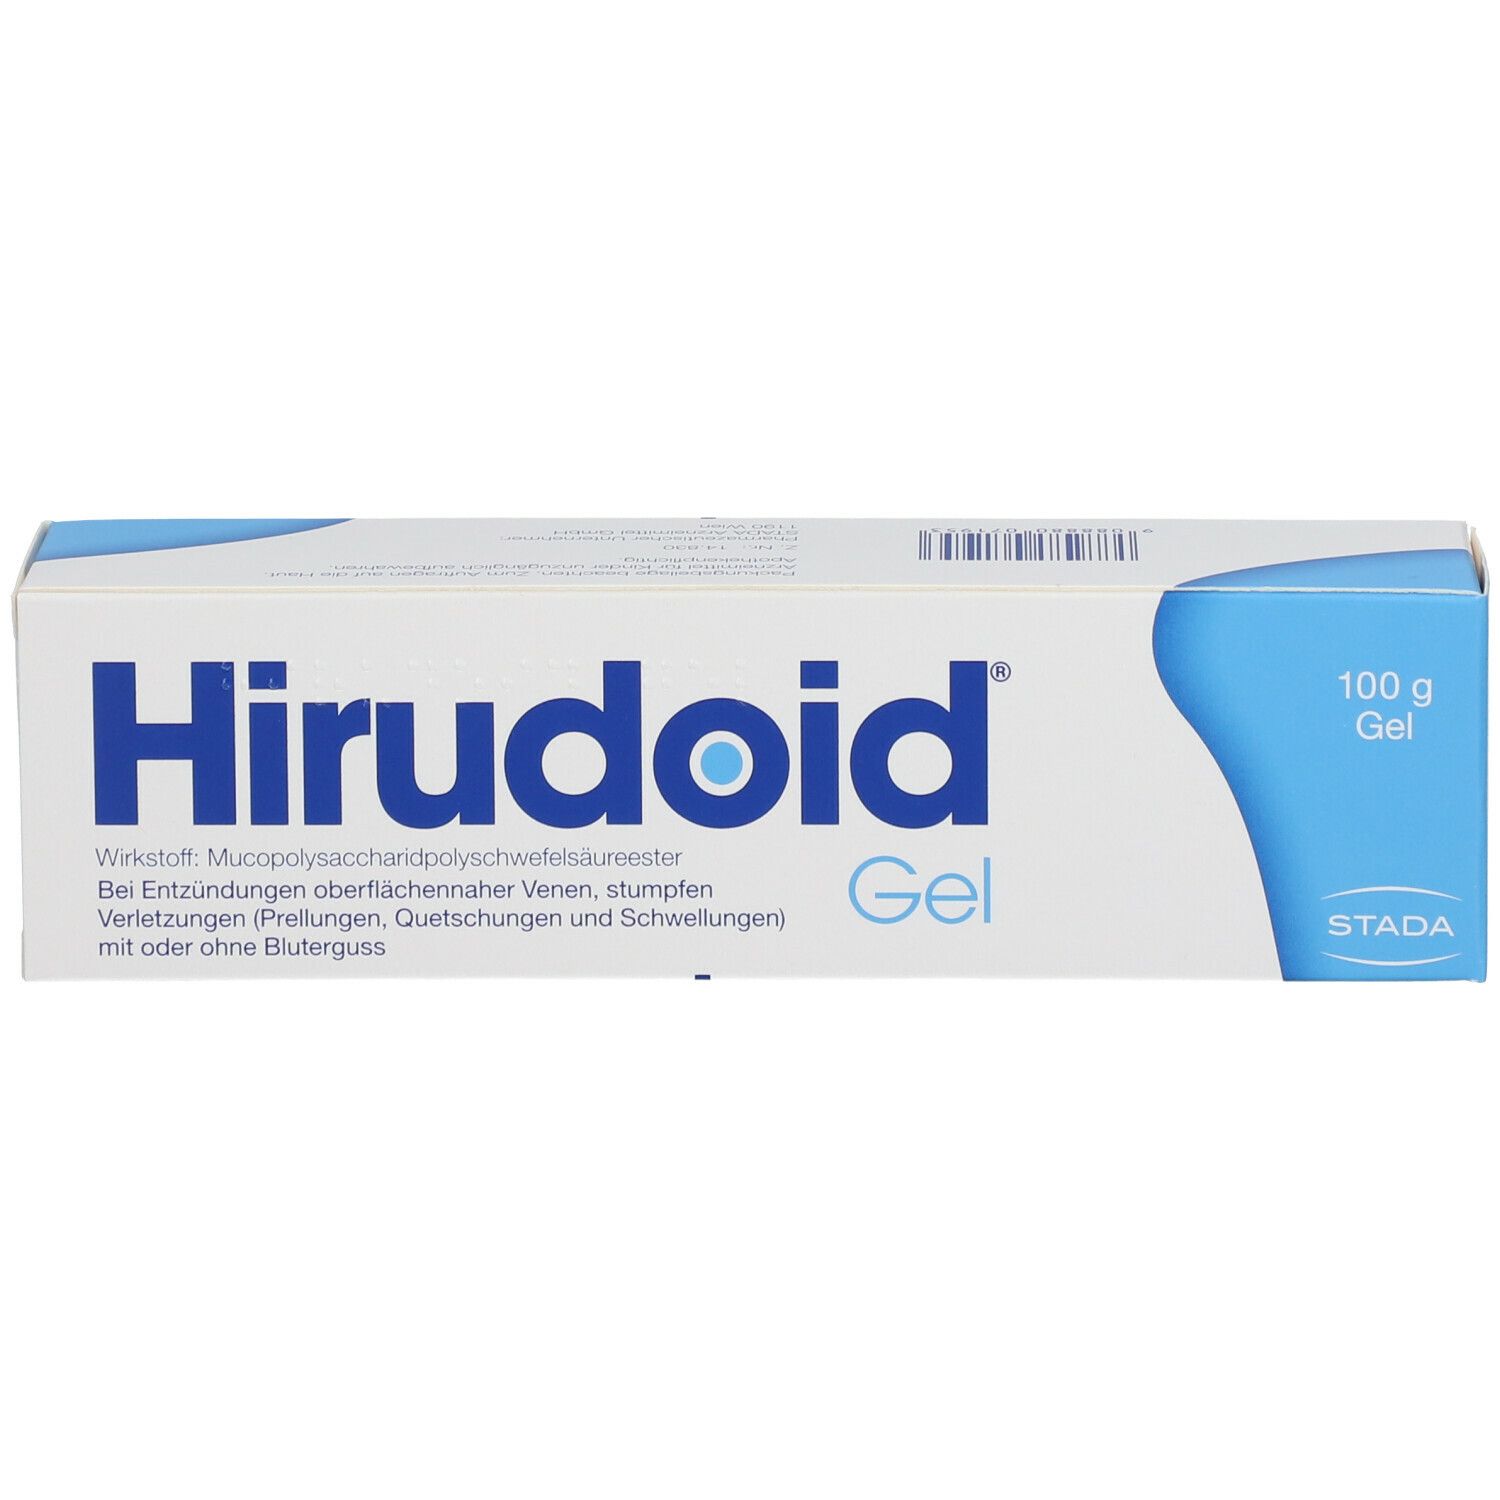 Hirudoid® Gel